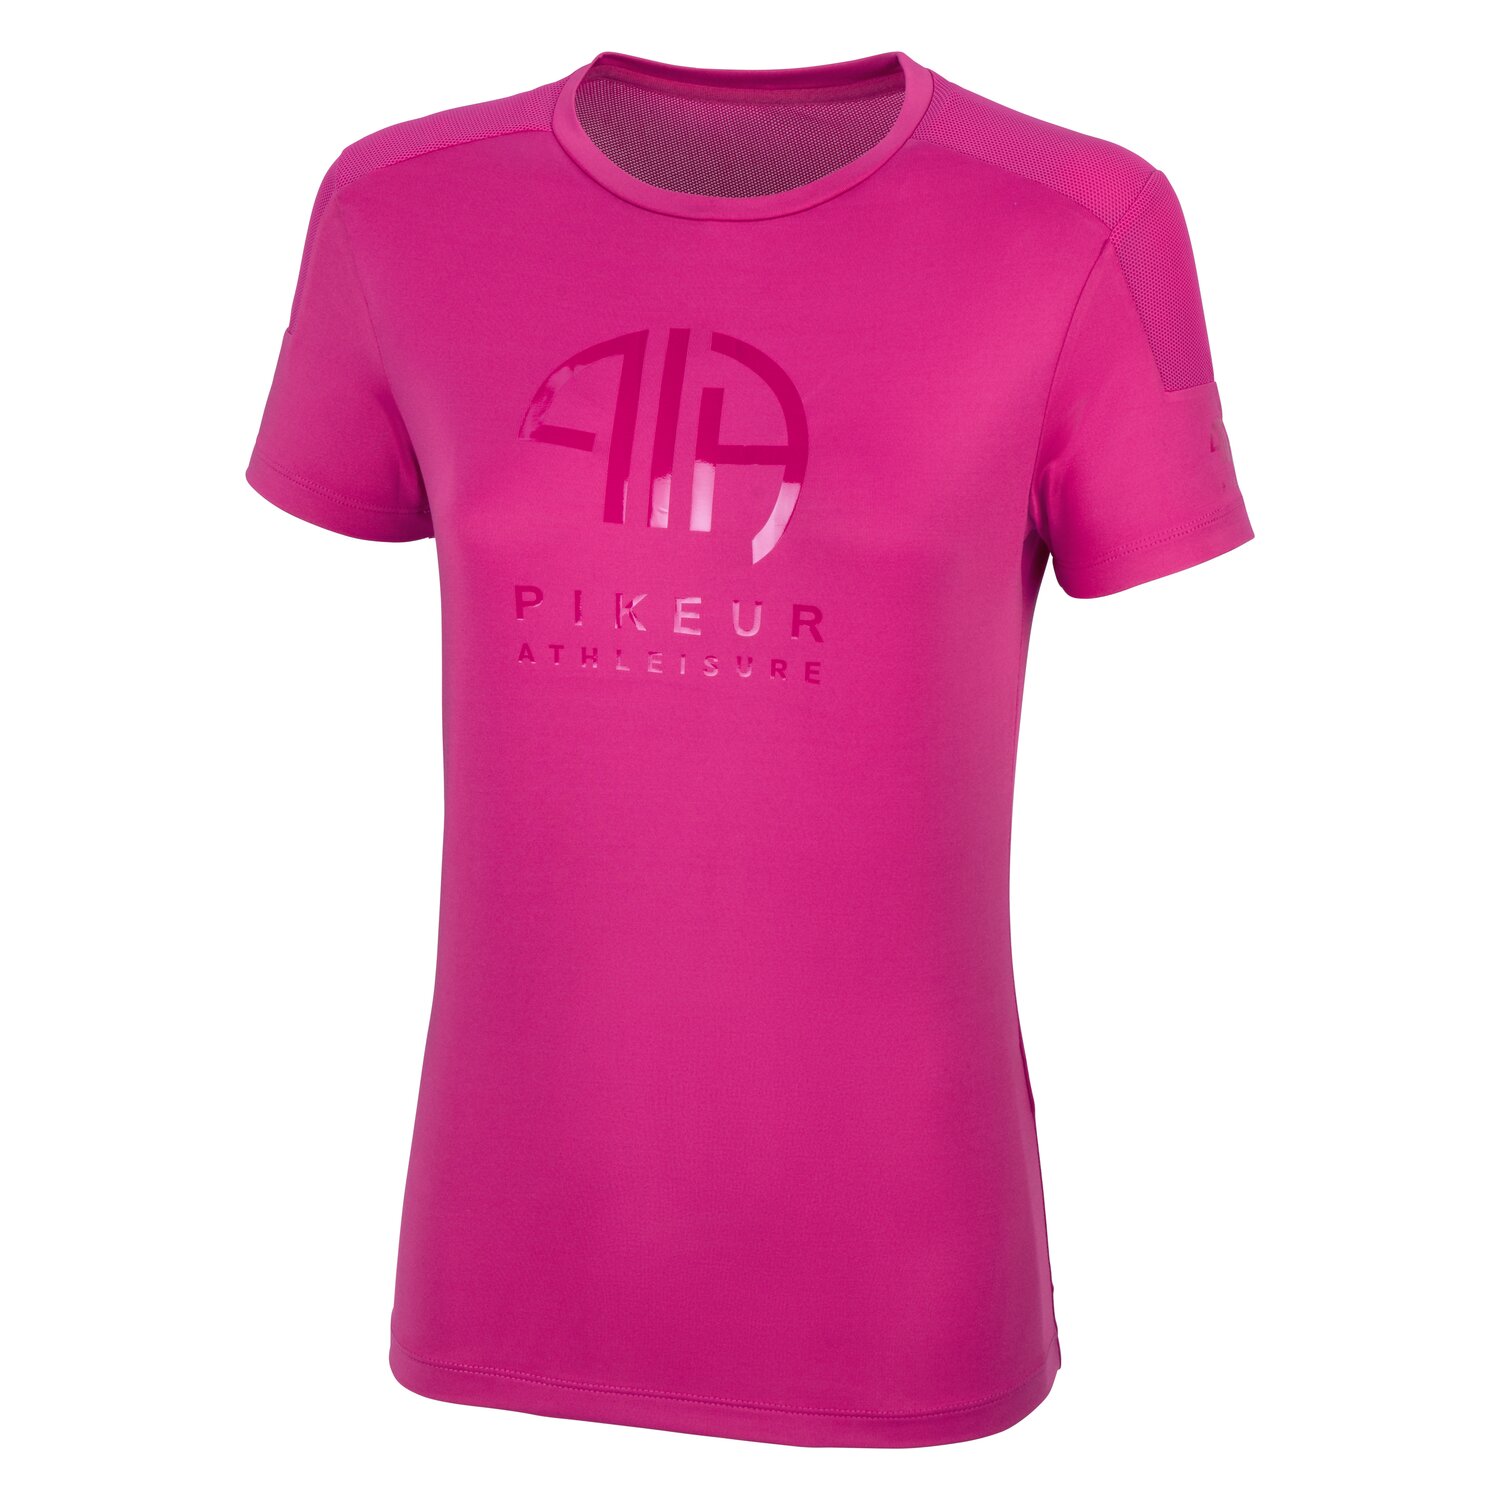 PIKEUR Hybrid-Shirt Trixi Athleisure hot-pink | 34